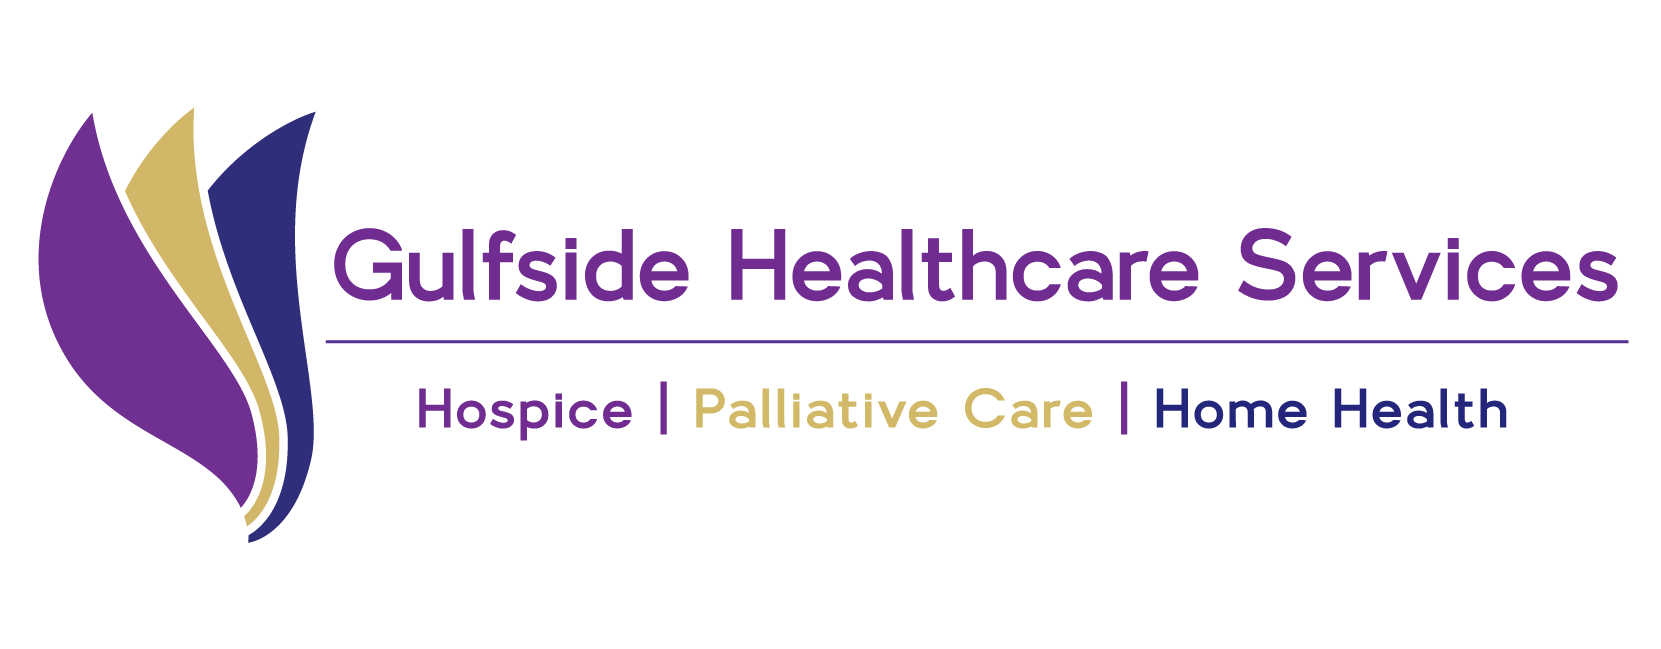 Gulfside Healthcare Services Logo